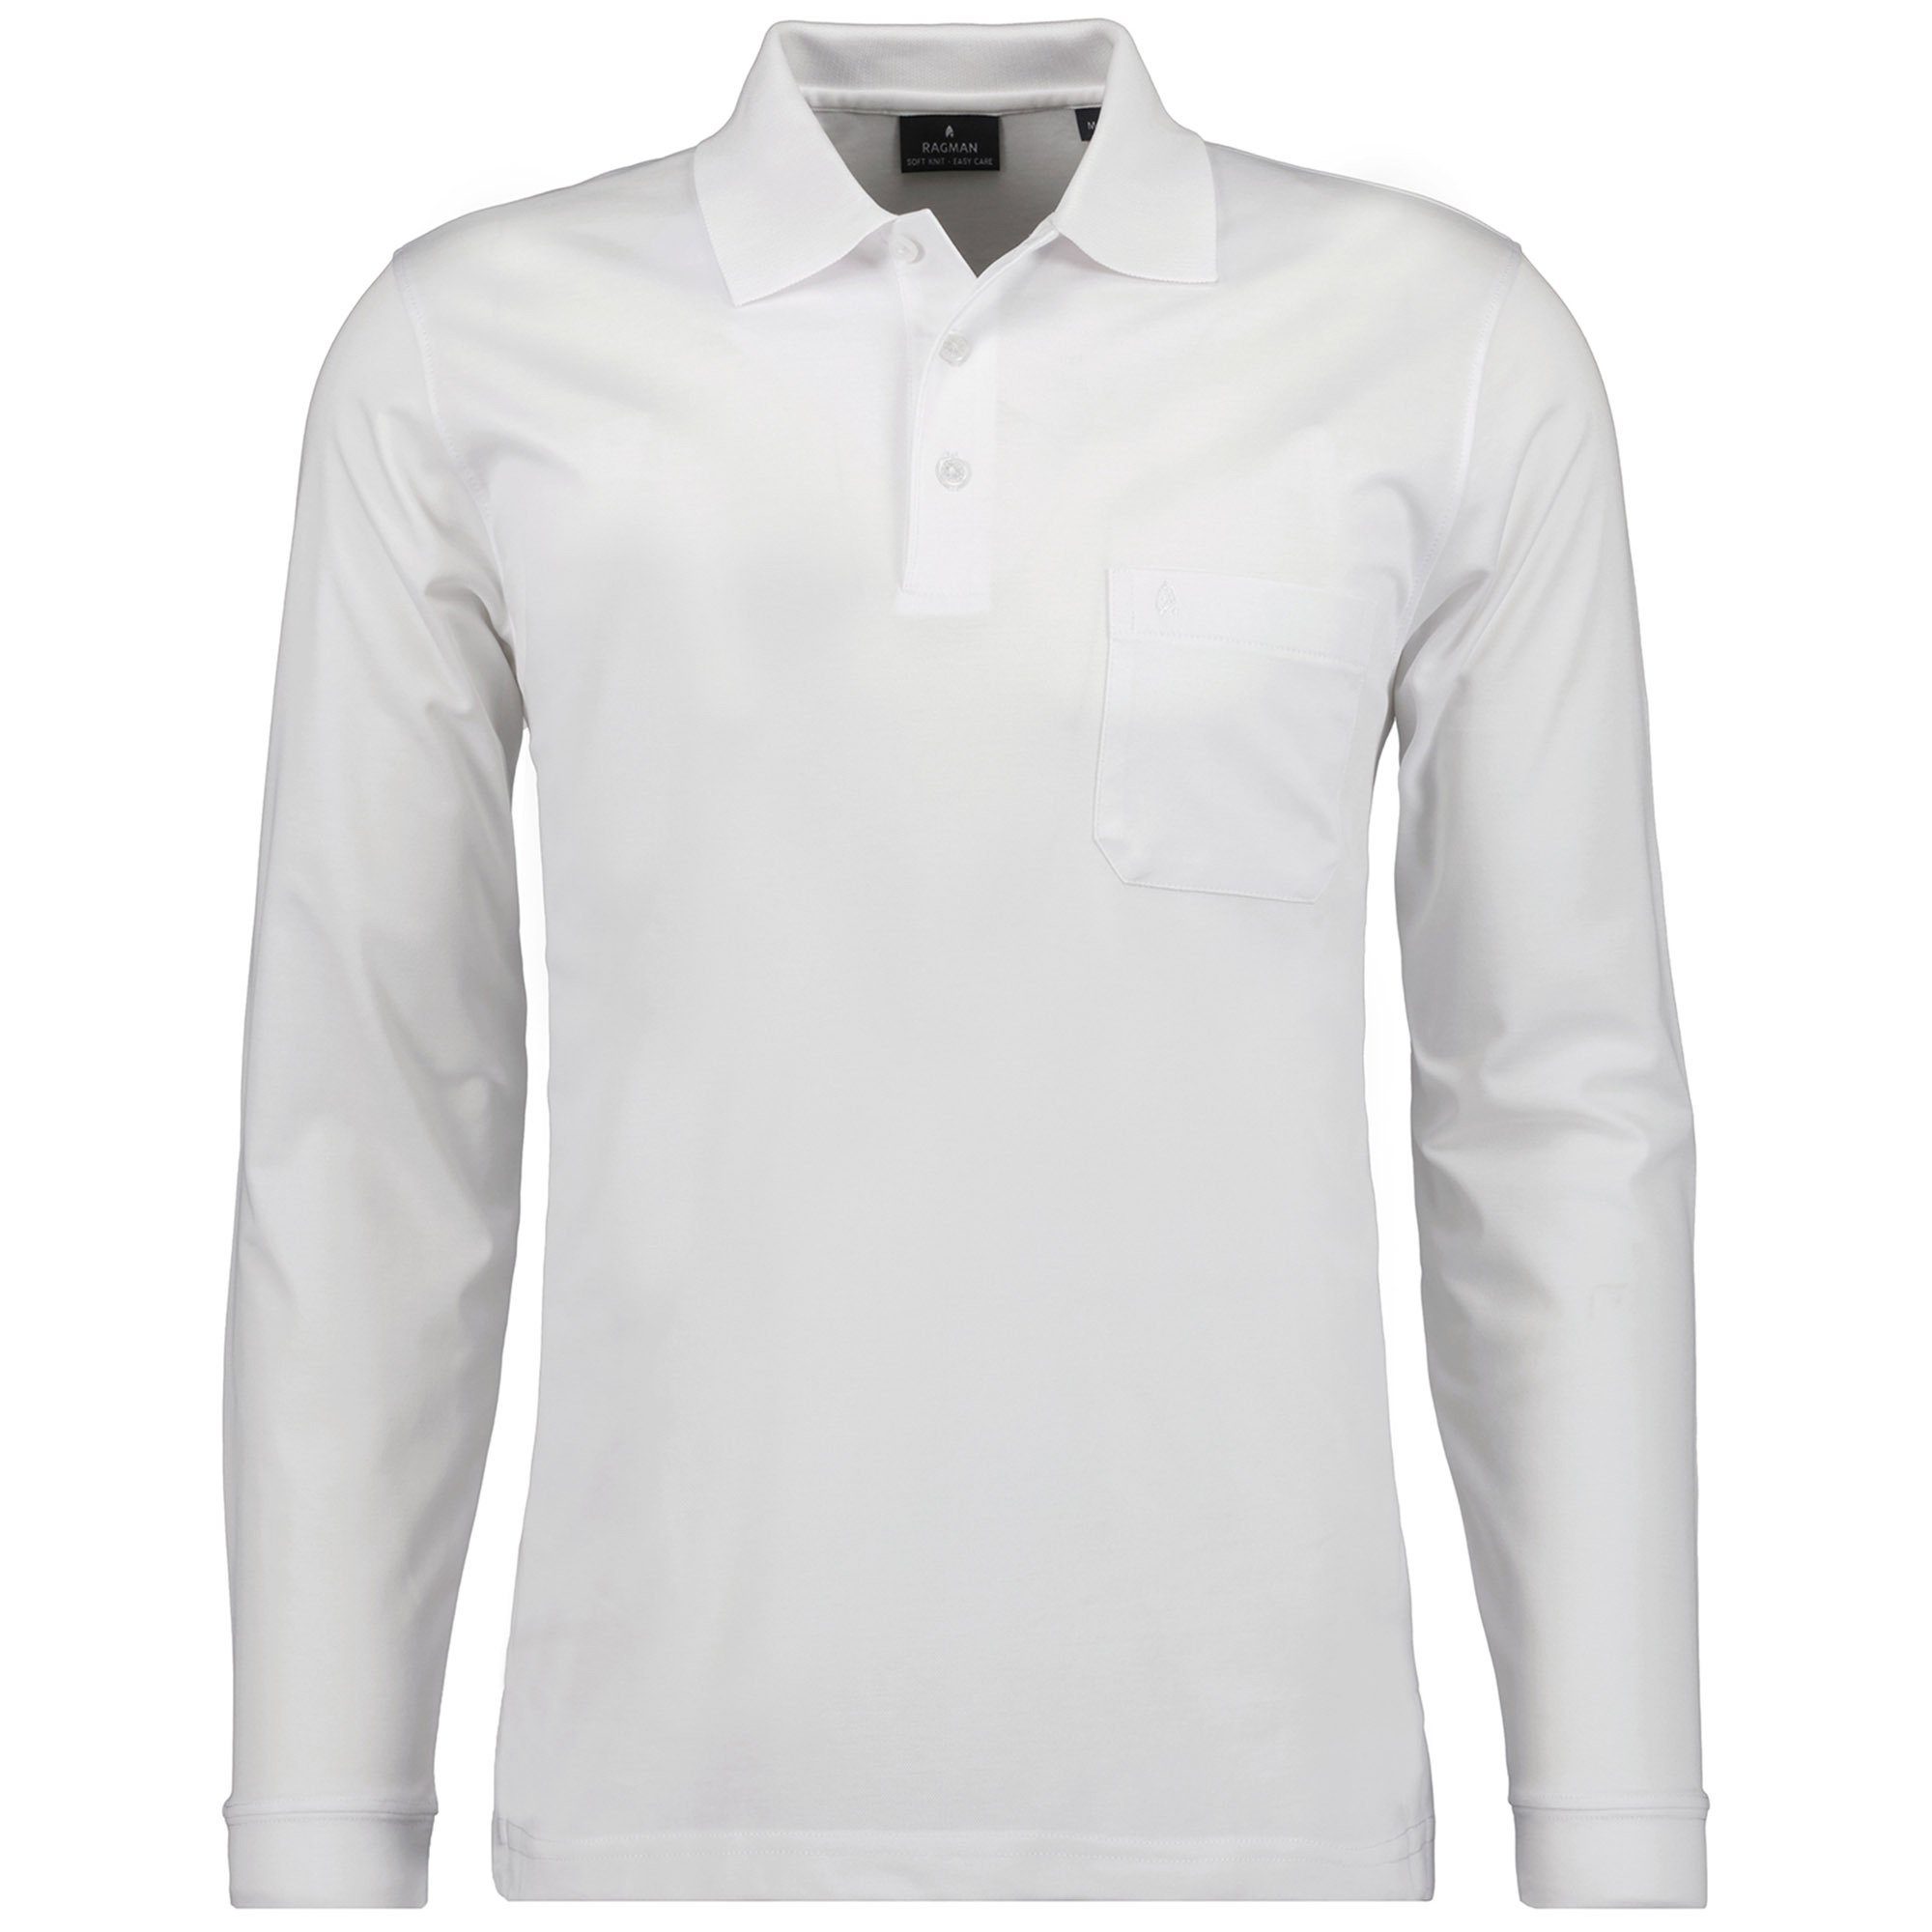 Poloshirt Weiß Soft Langarm-Poloshirt Knit - Knopf Polo RAGMAN Herren